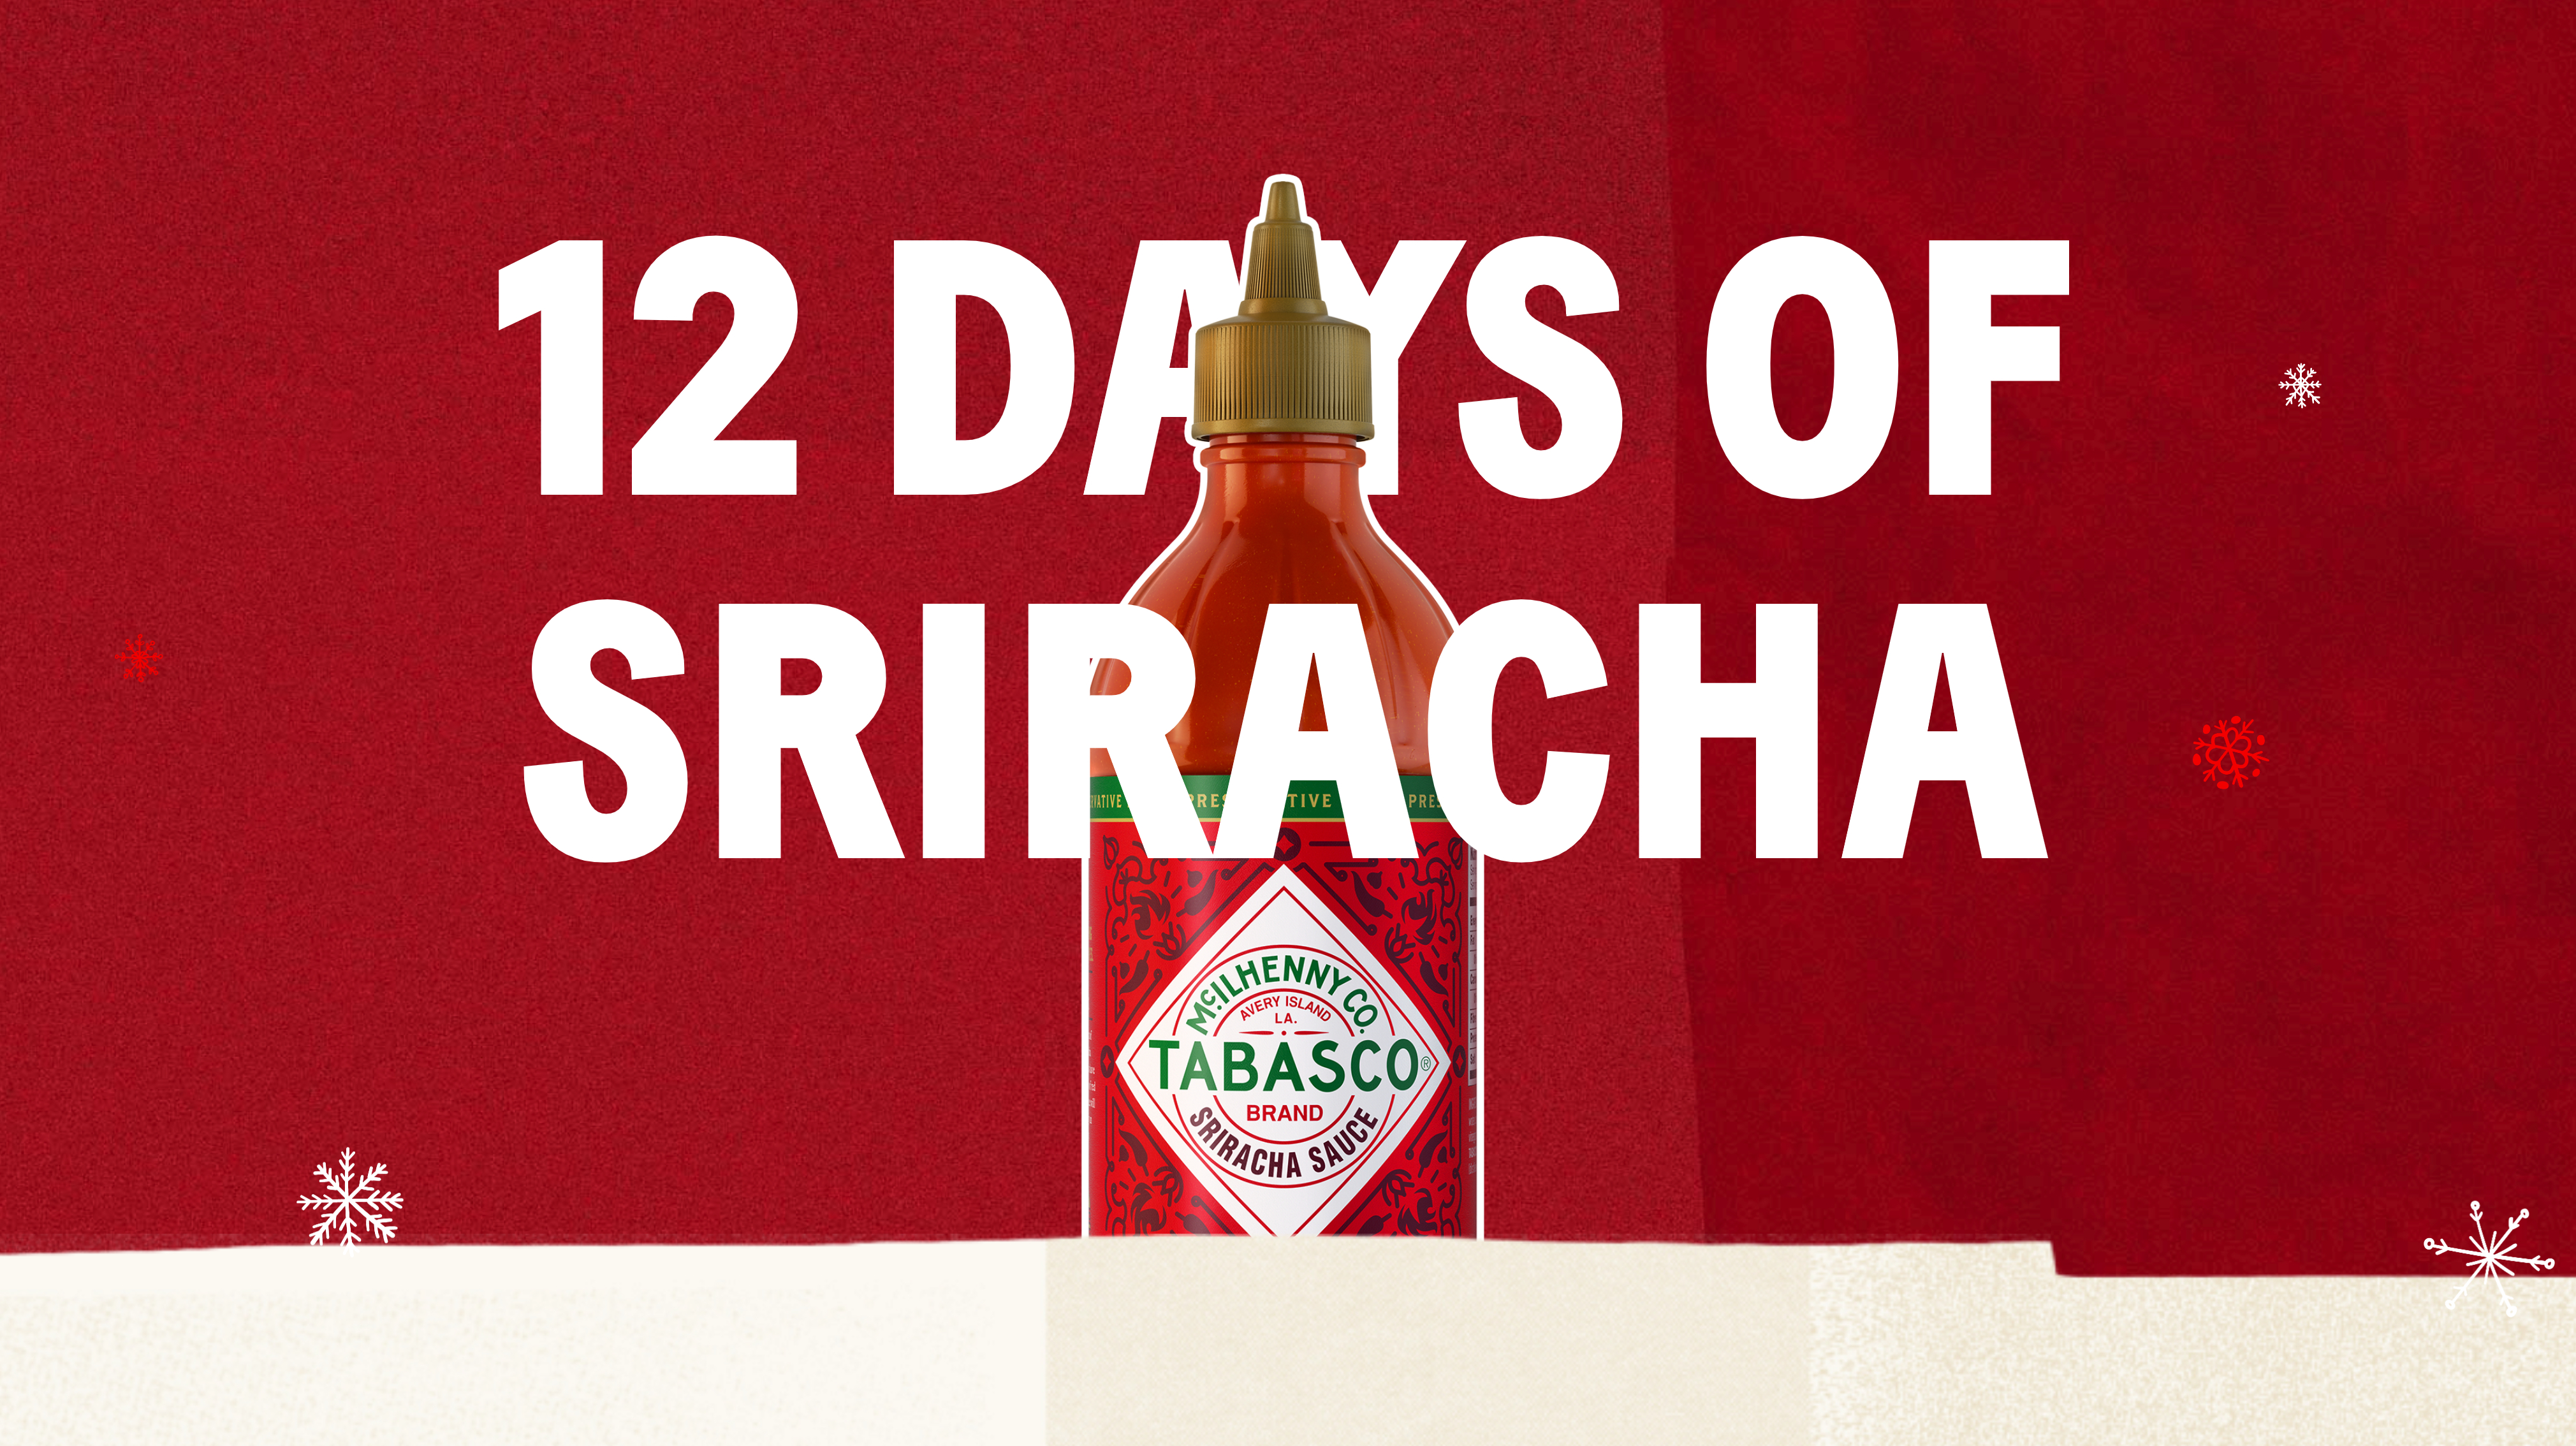 LA Restaurant Will Give Free Food to Anyone Who Brings in Sriracha